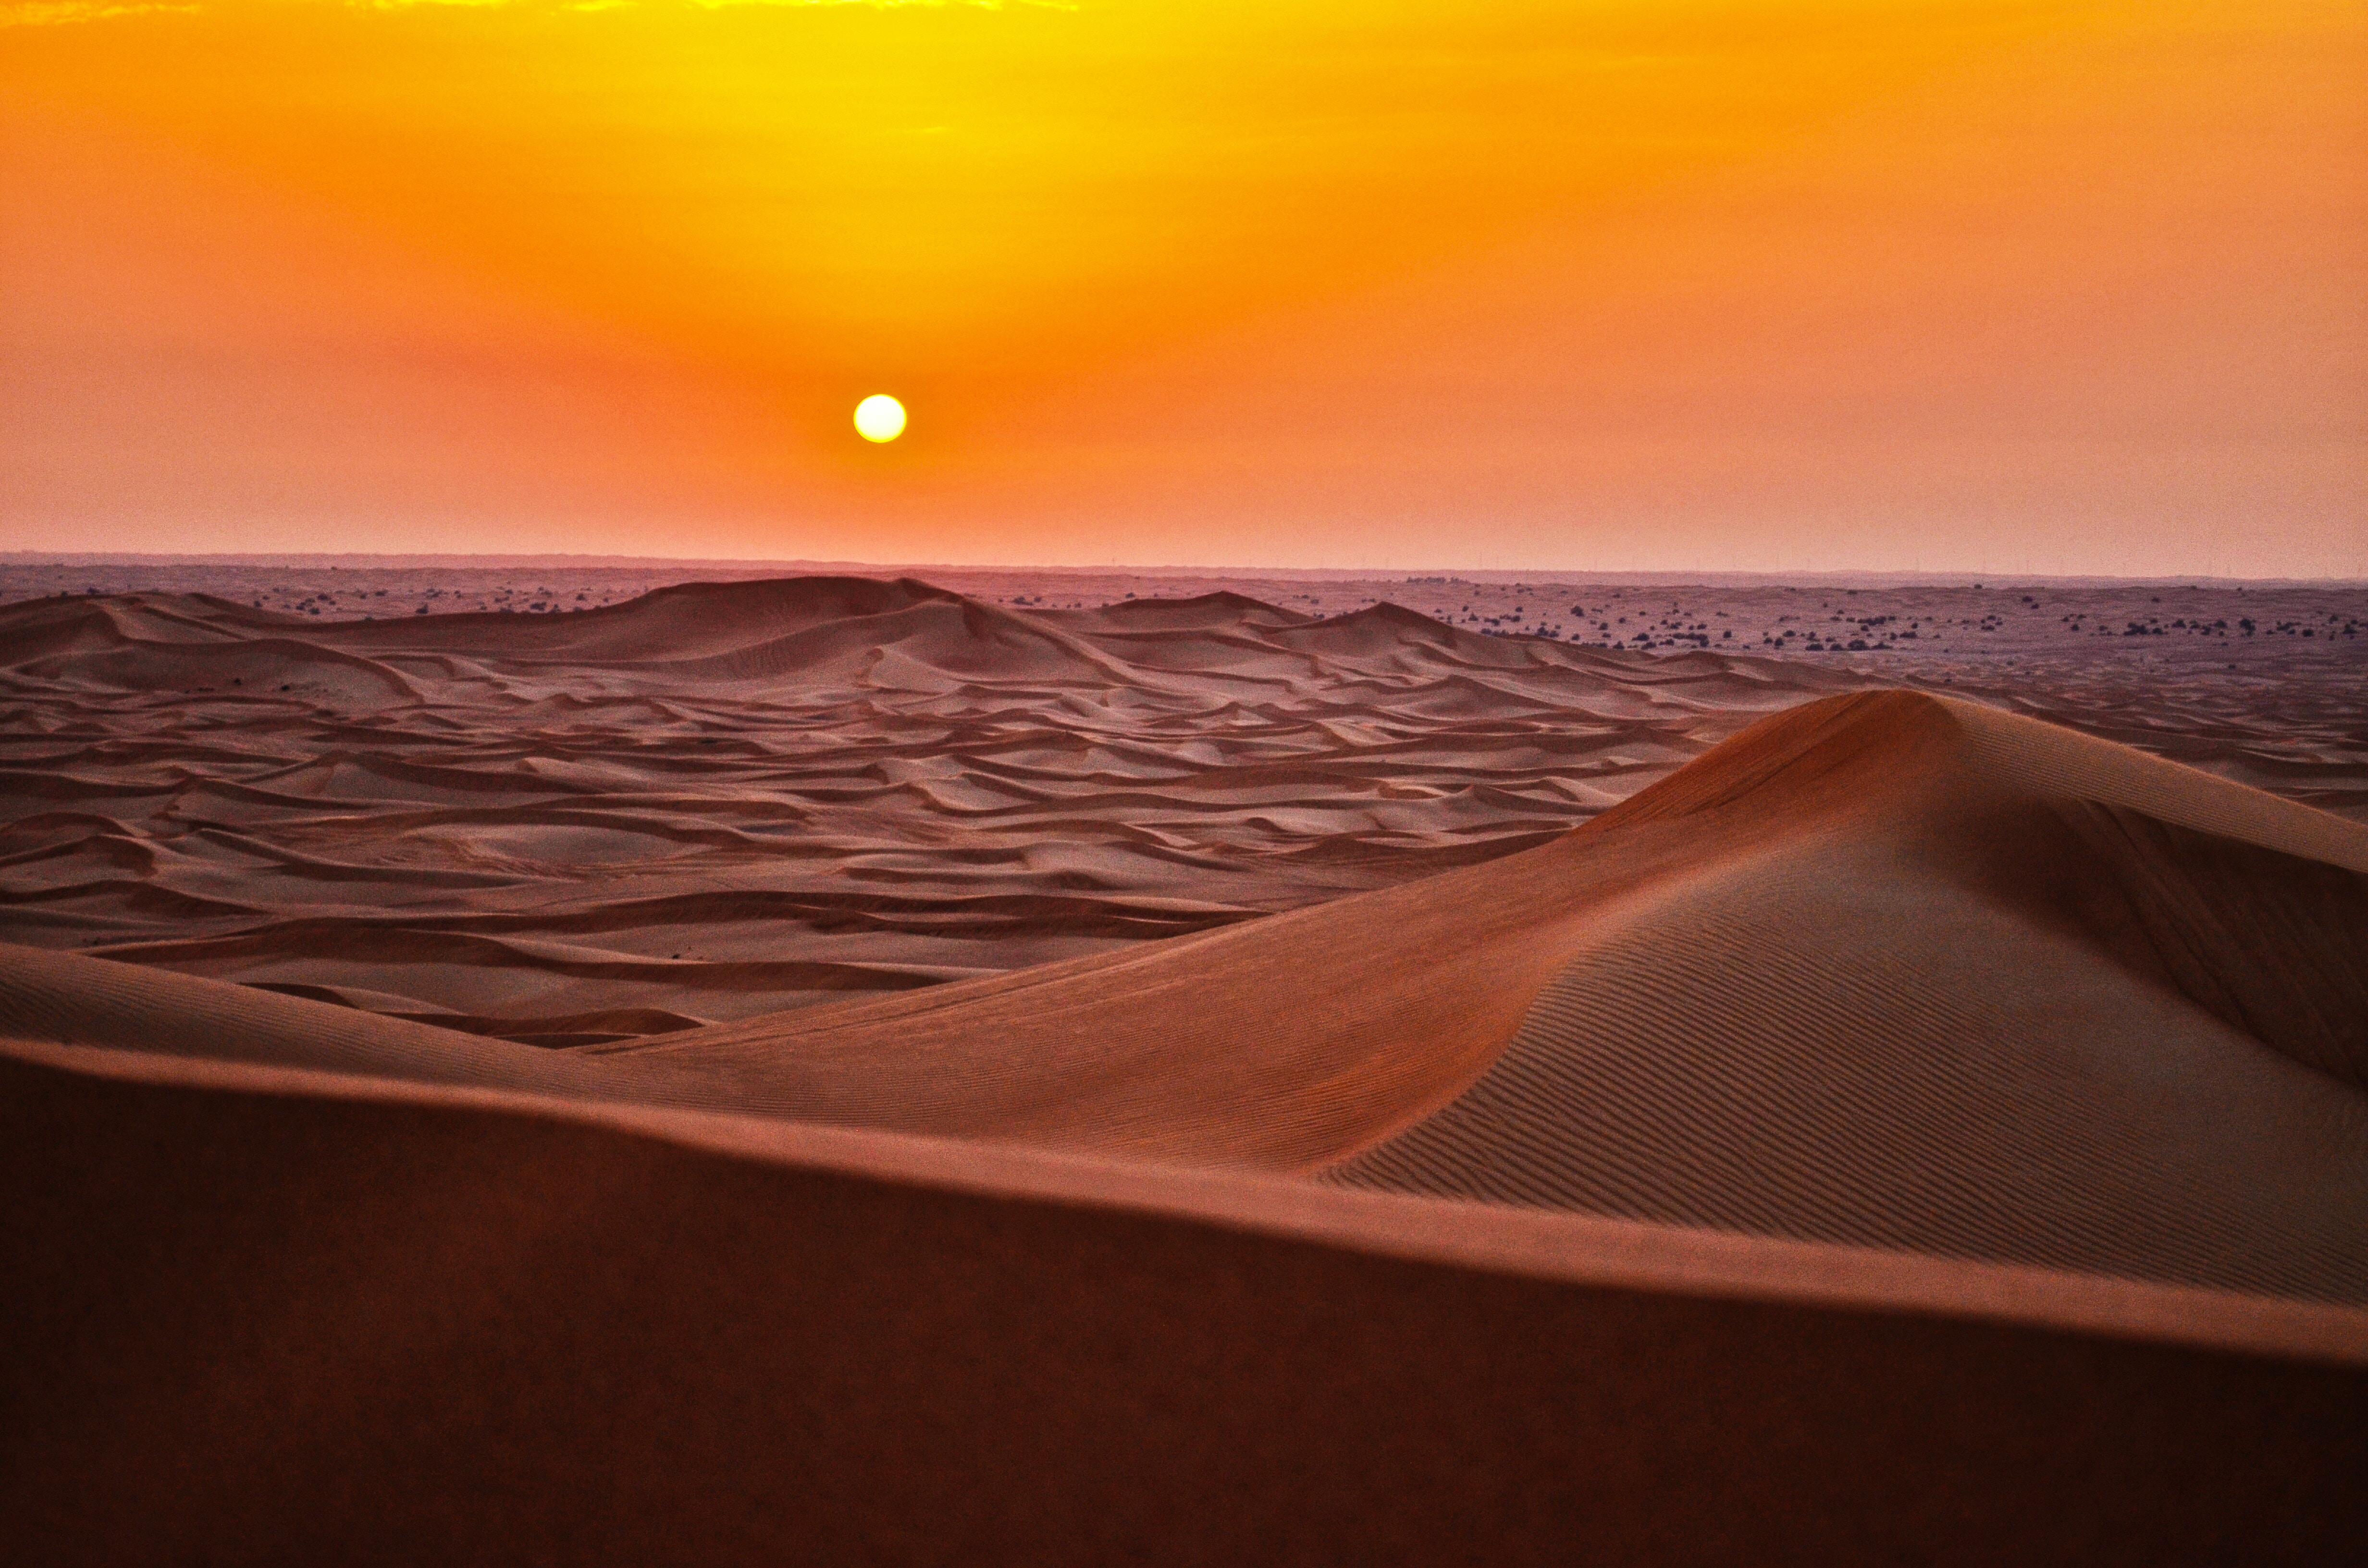 sandy desert at sunset with orange sky